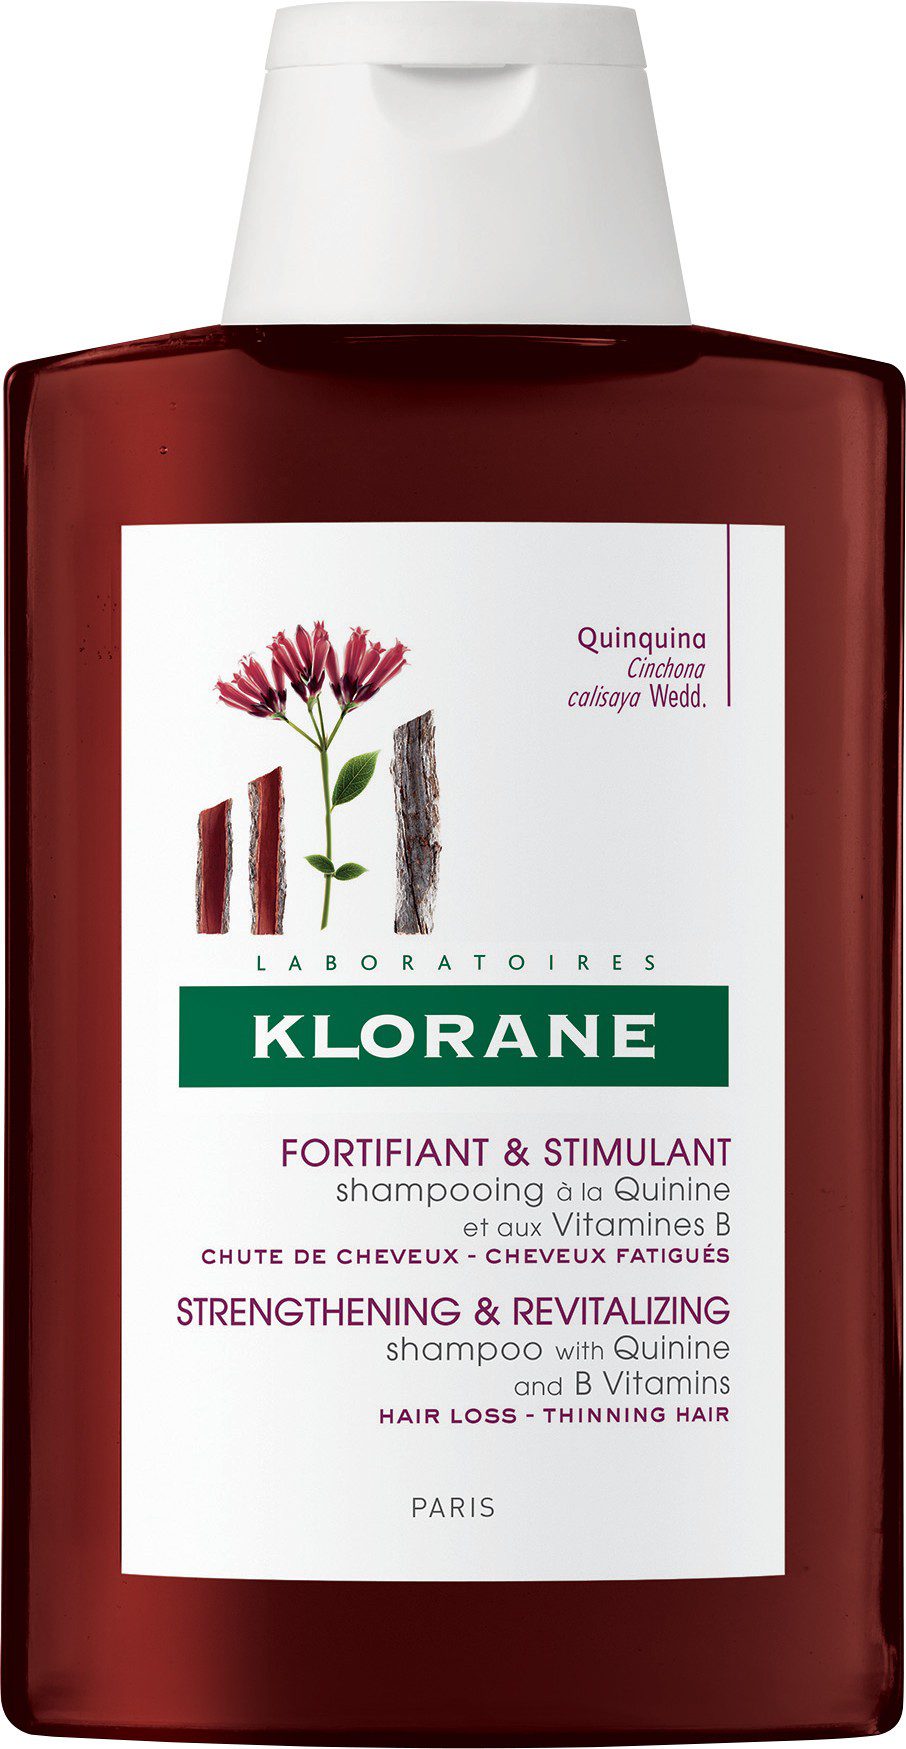 Klorane - Shampoing à la quinine et aux vitamines B